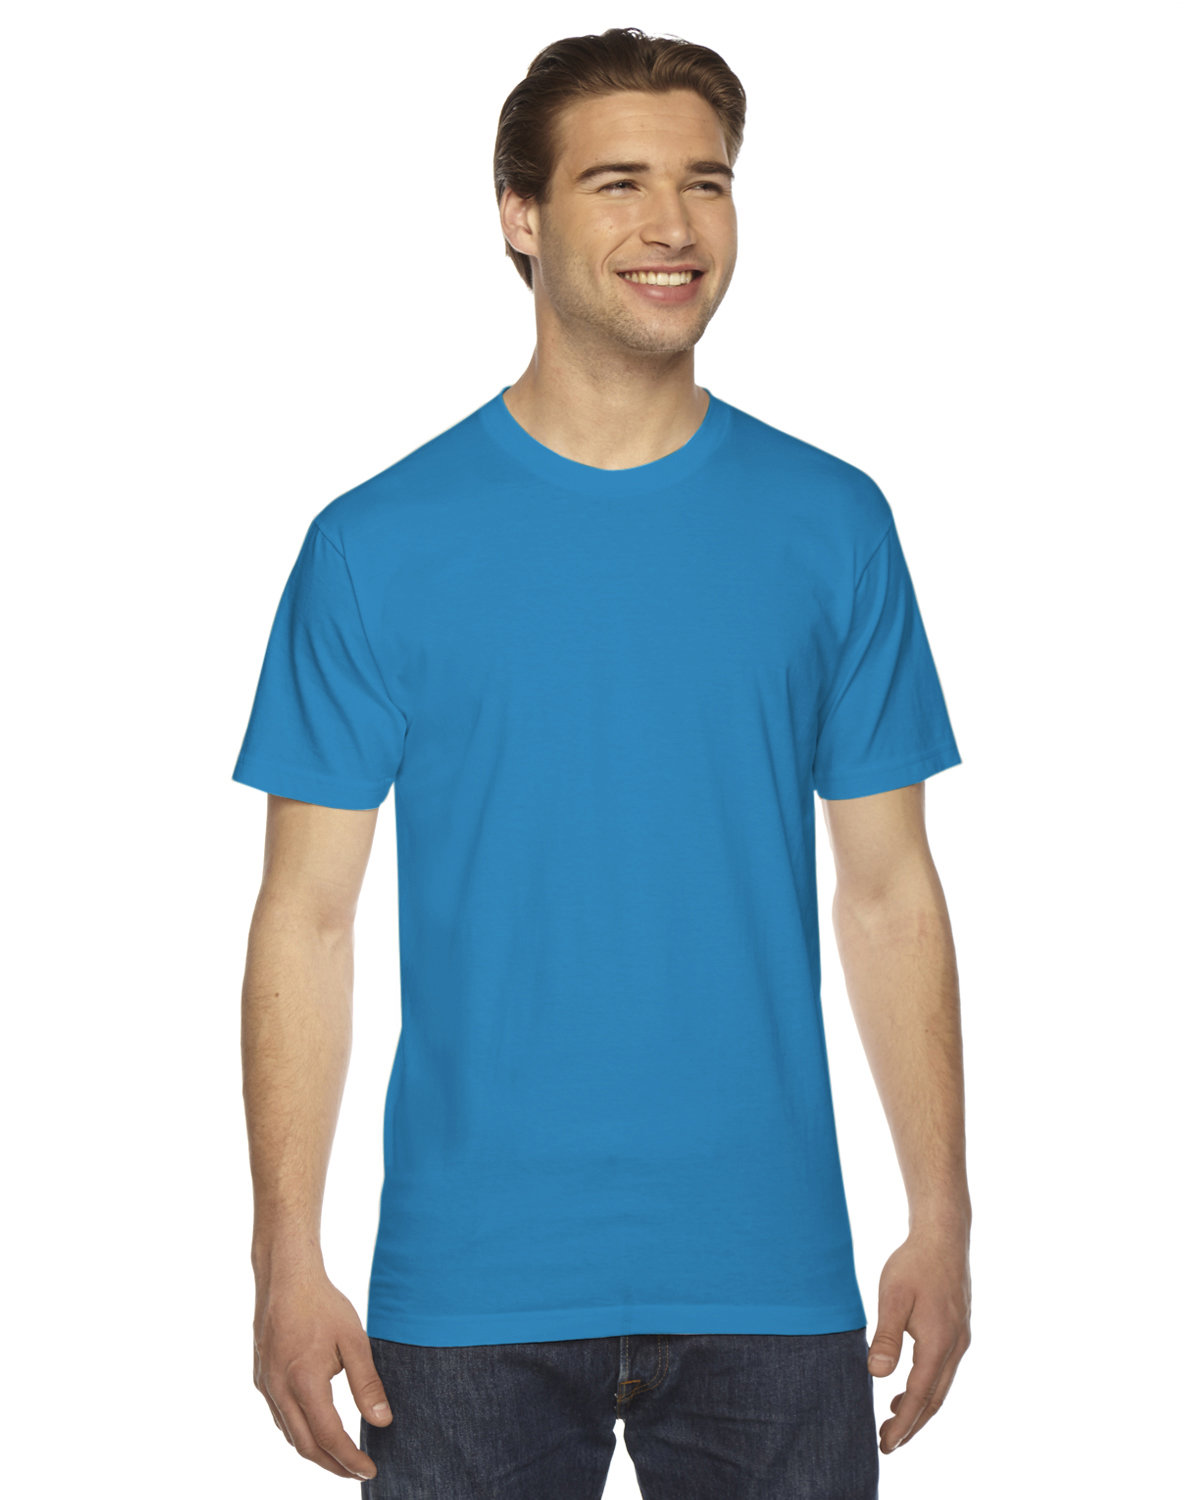 American Apparel Unisex Fine Jersey Short-Sleeve T-Shirt TEAL 